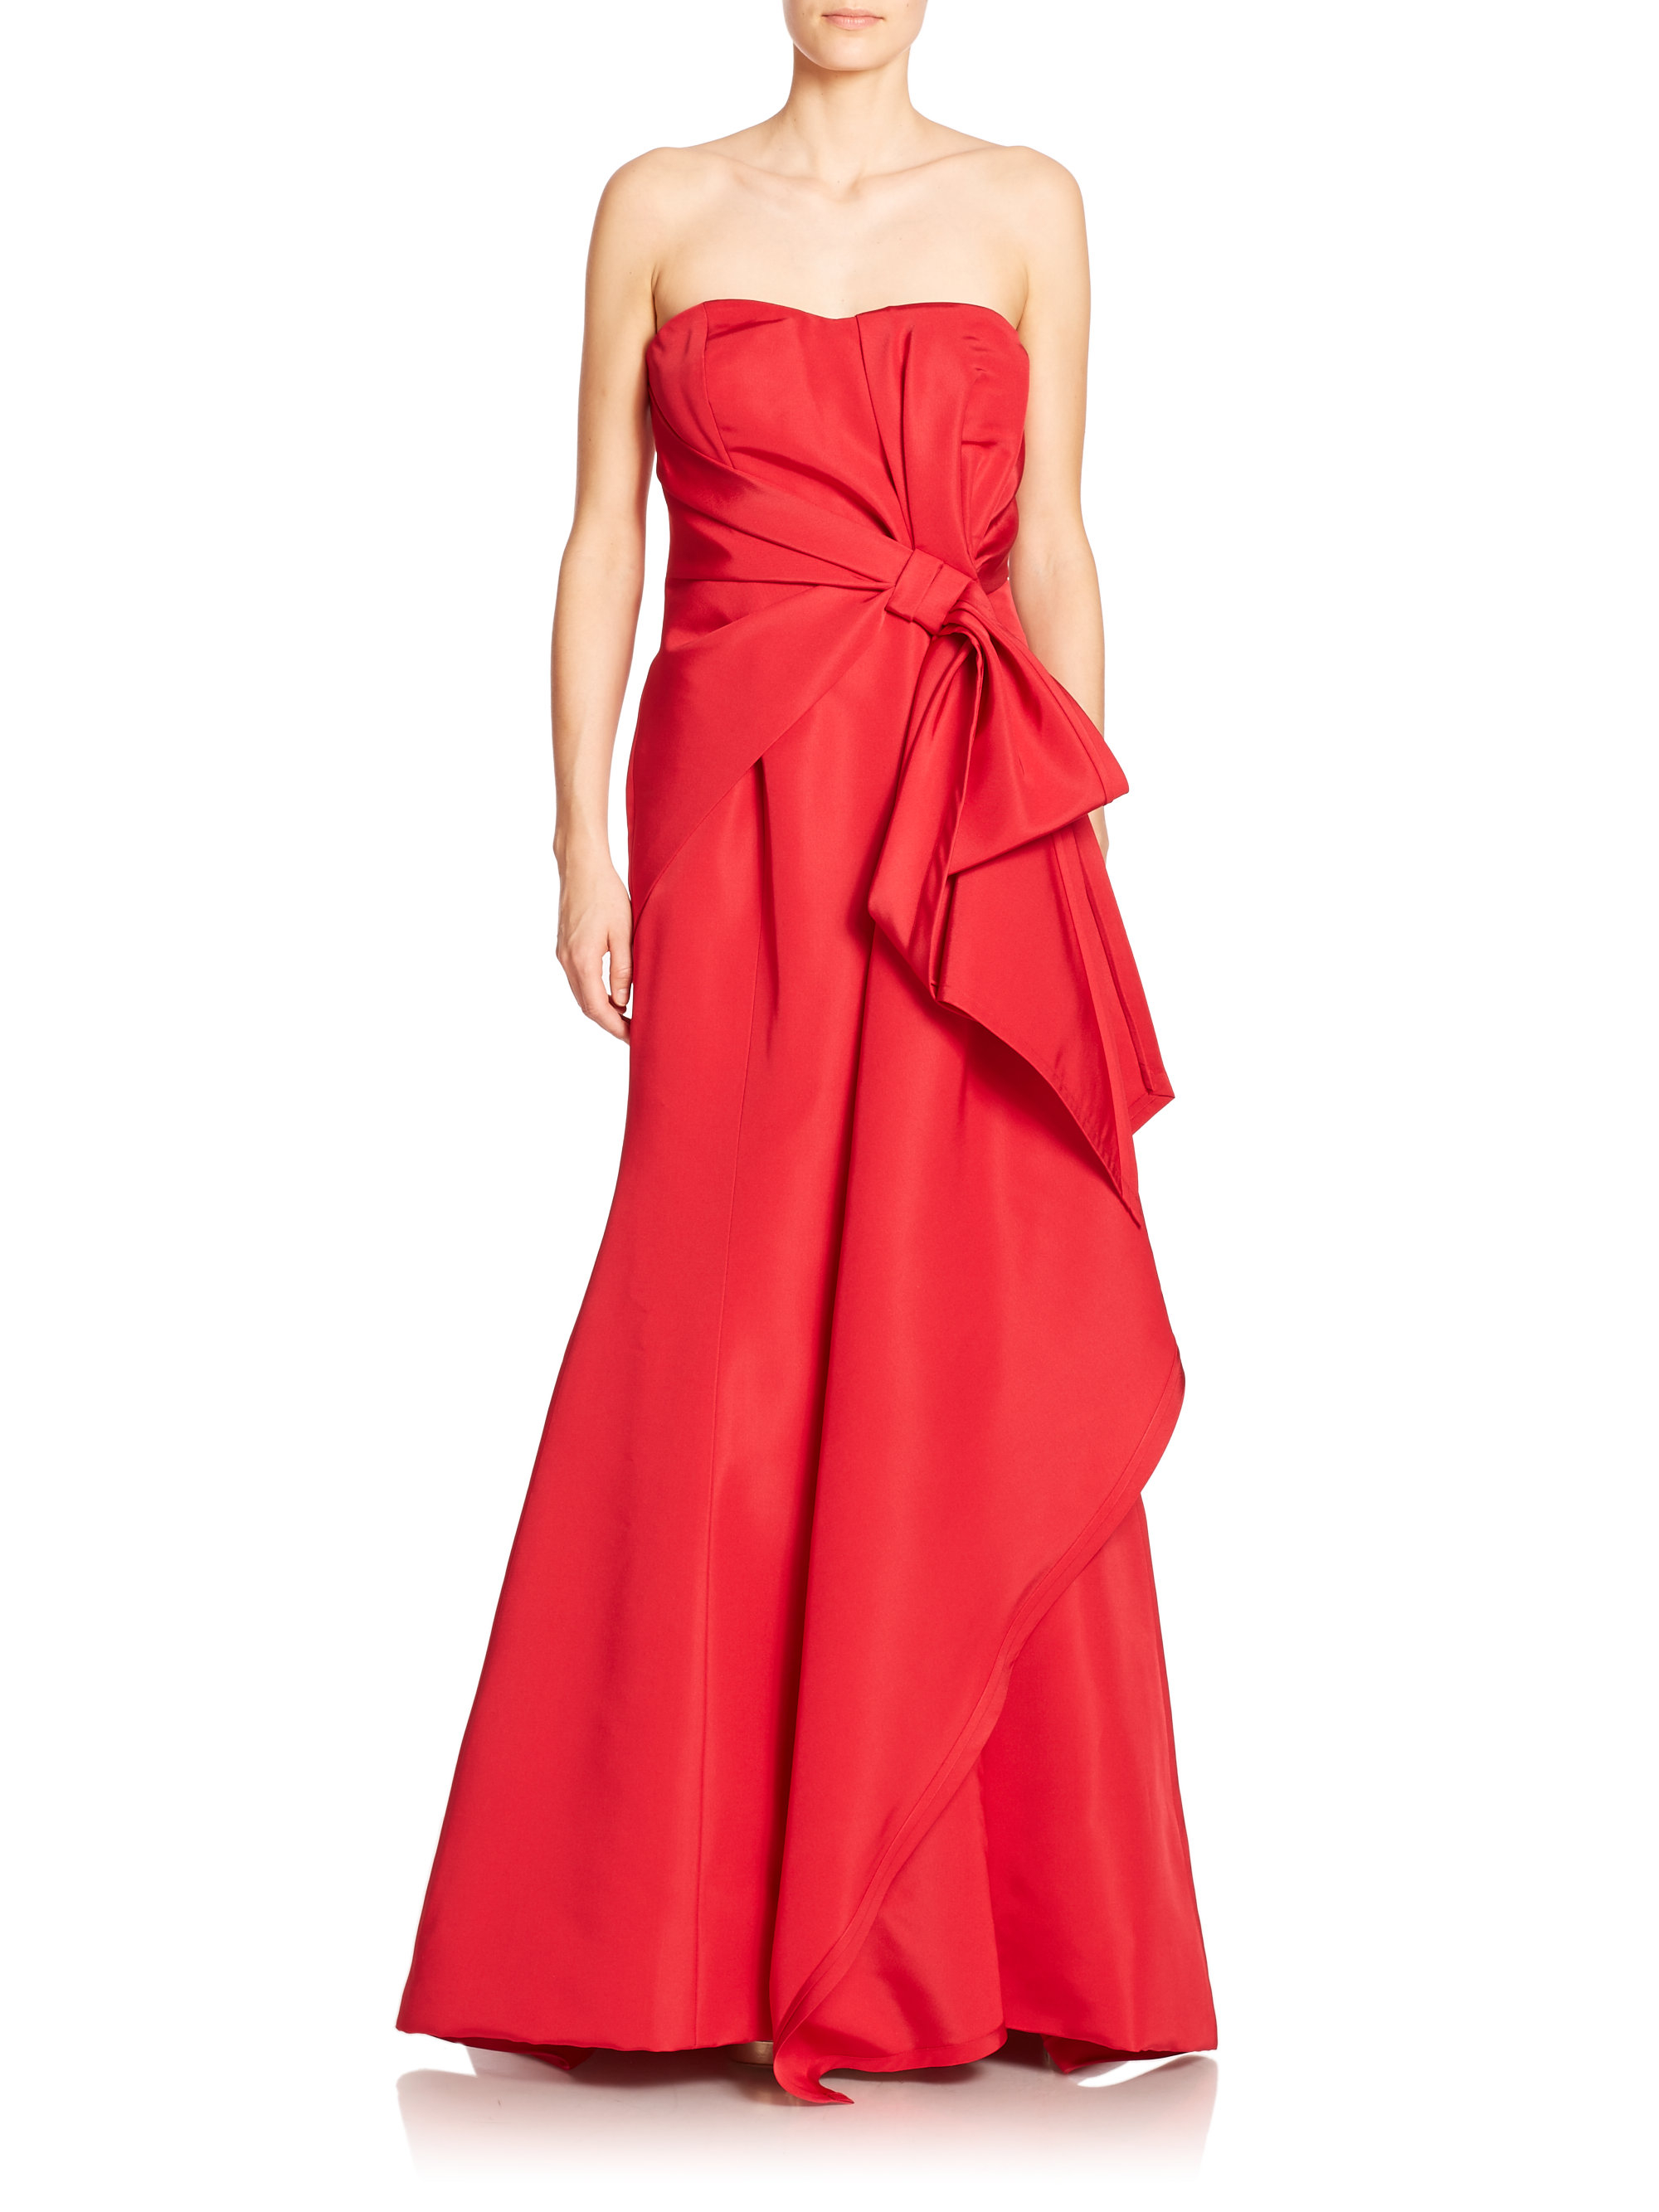 Lyst - Carolina Herrera Silk Sweetheart Gown in Red